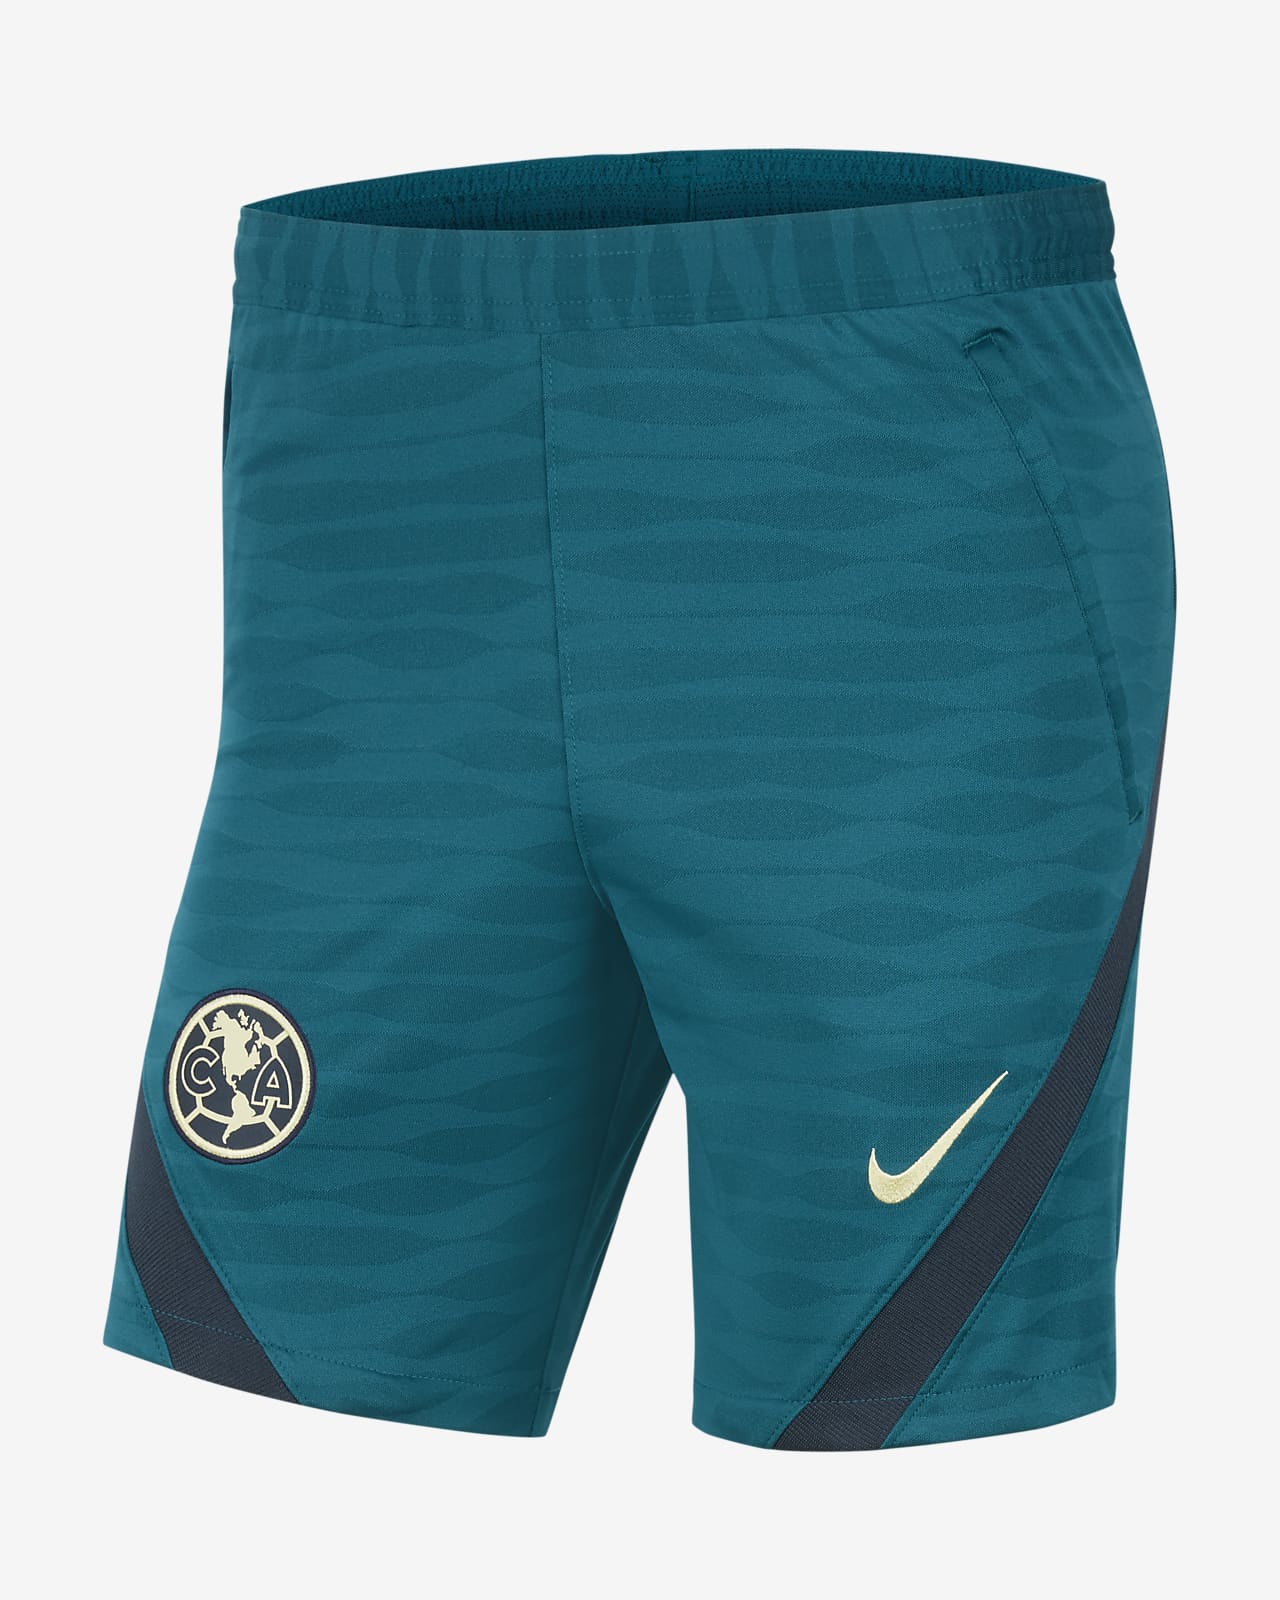 Club América Strike Men's Nike Dri-FIT Knit Soccer Shorts. 